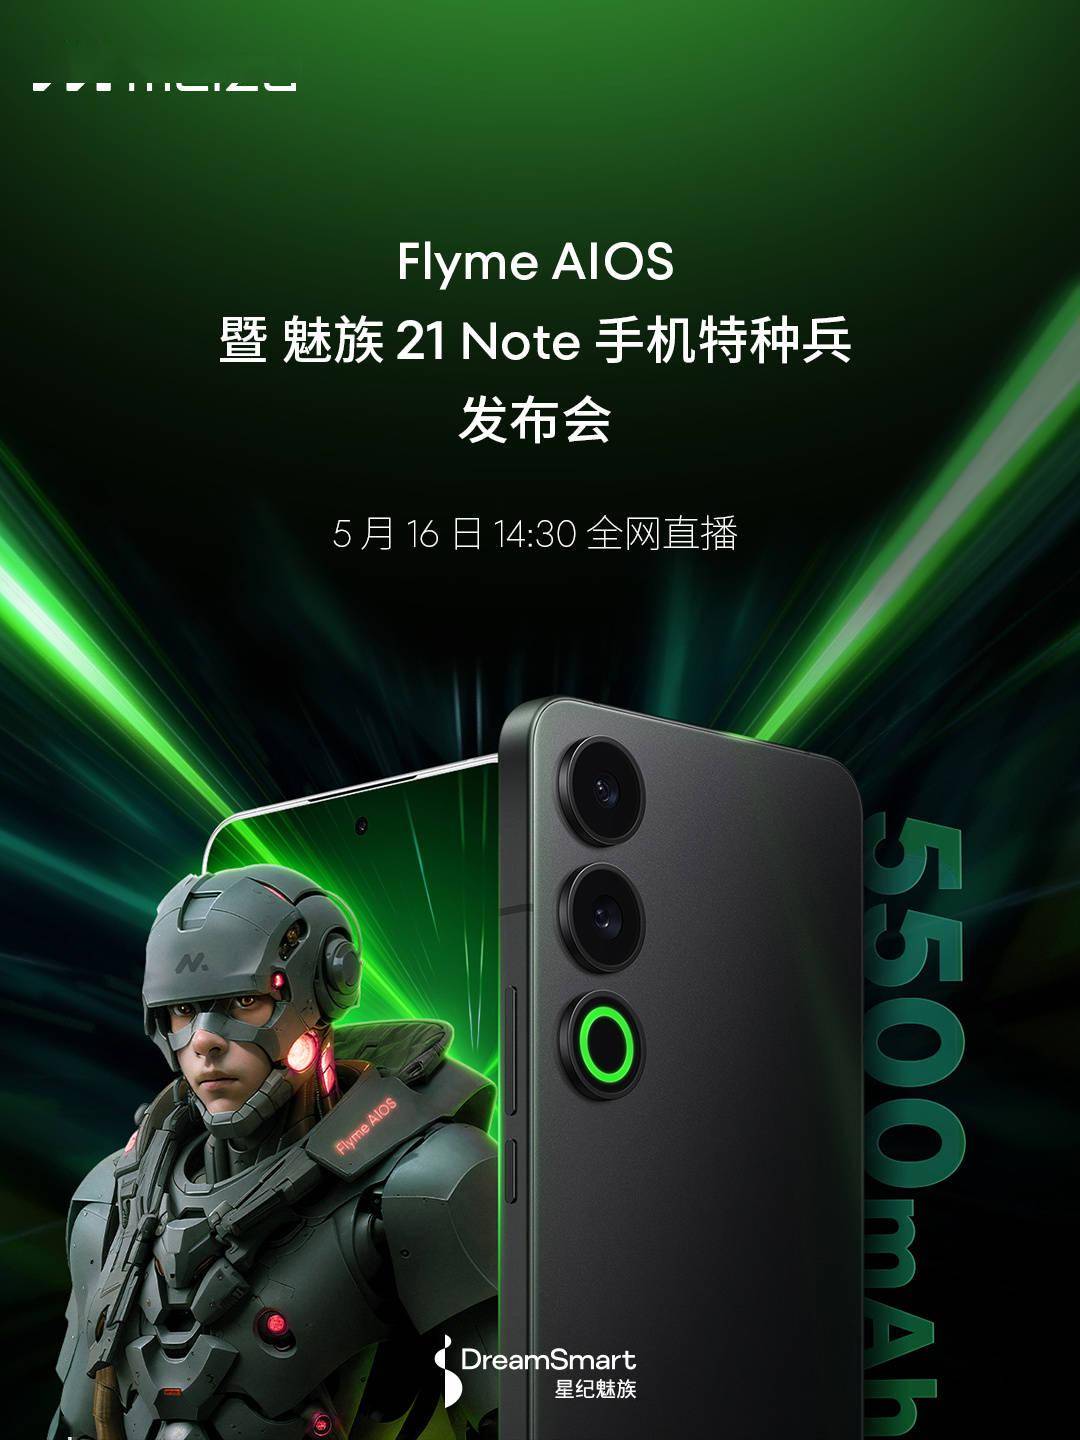 Flyme AIOS暨魅族21 Note手机特种兵发布会5月16日举行 全系16GB运存